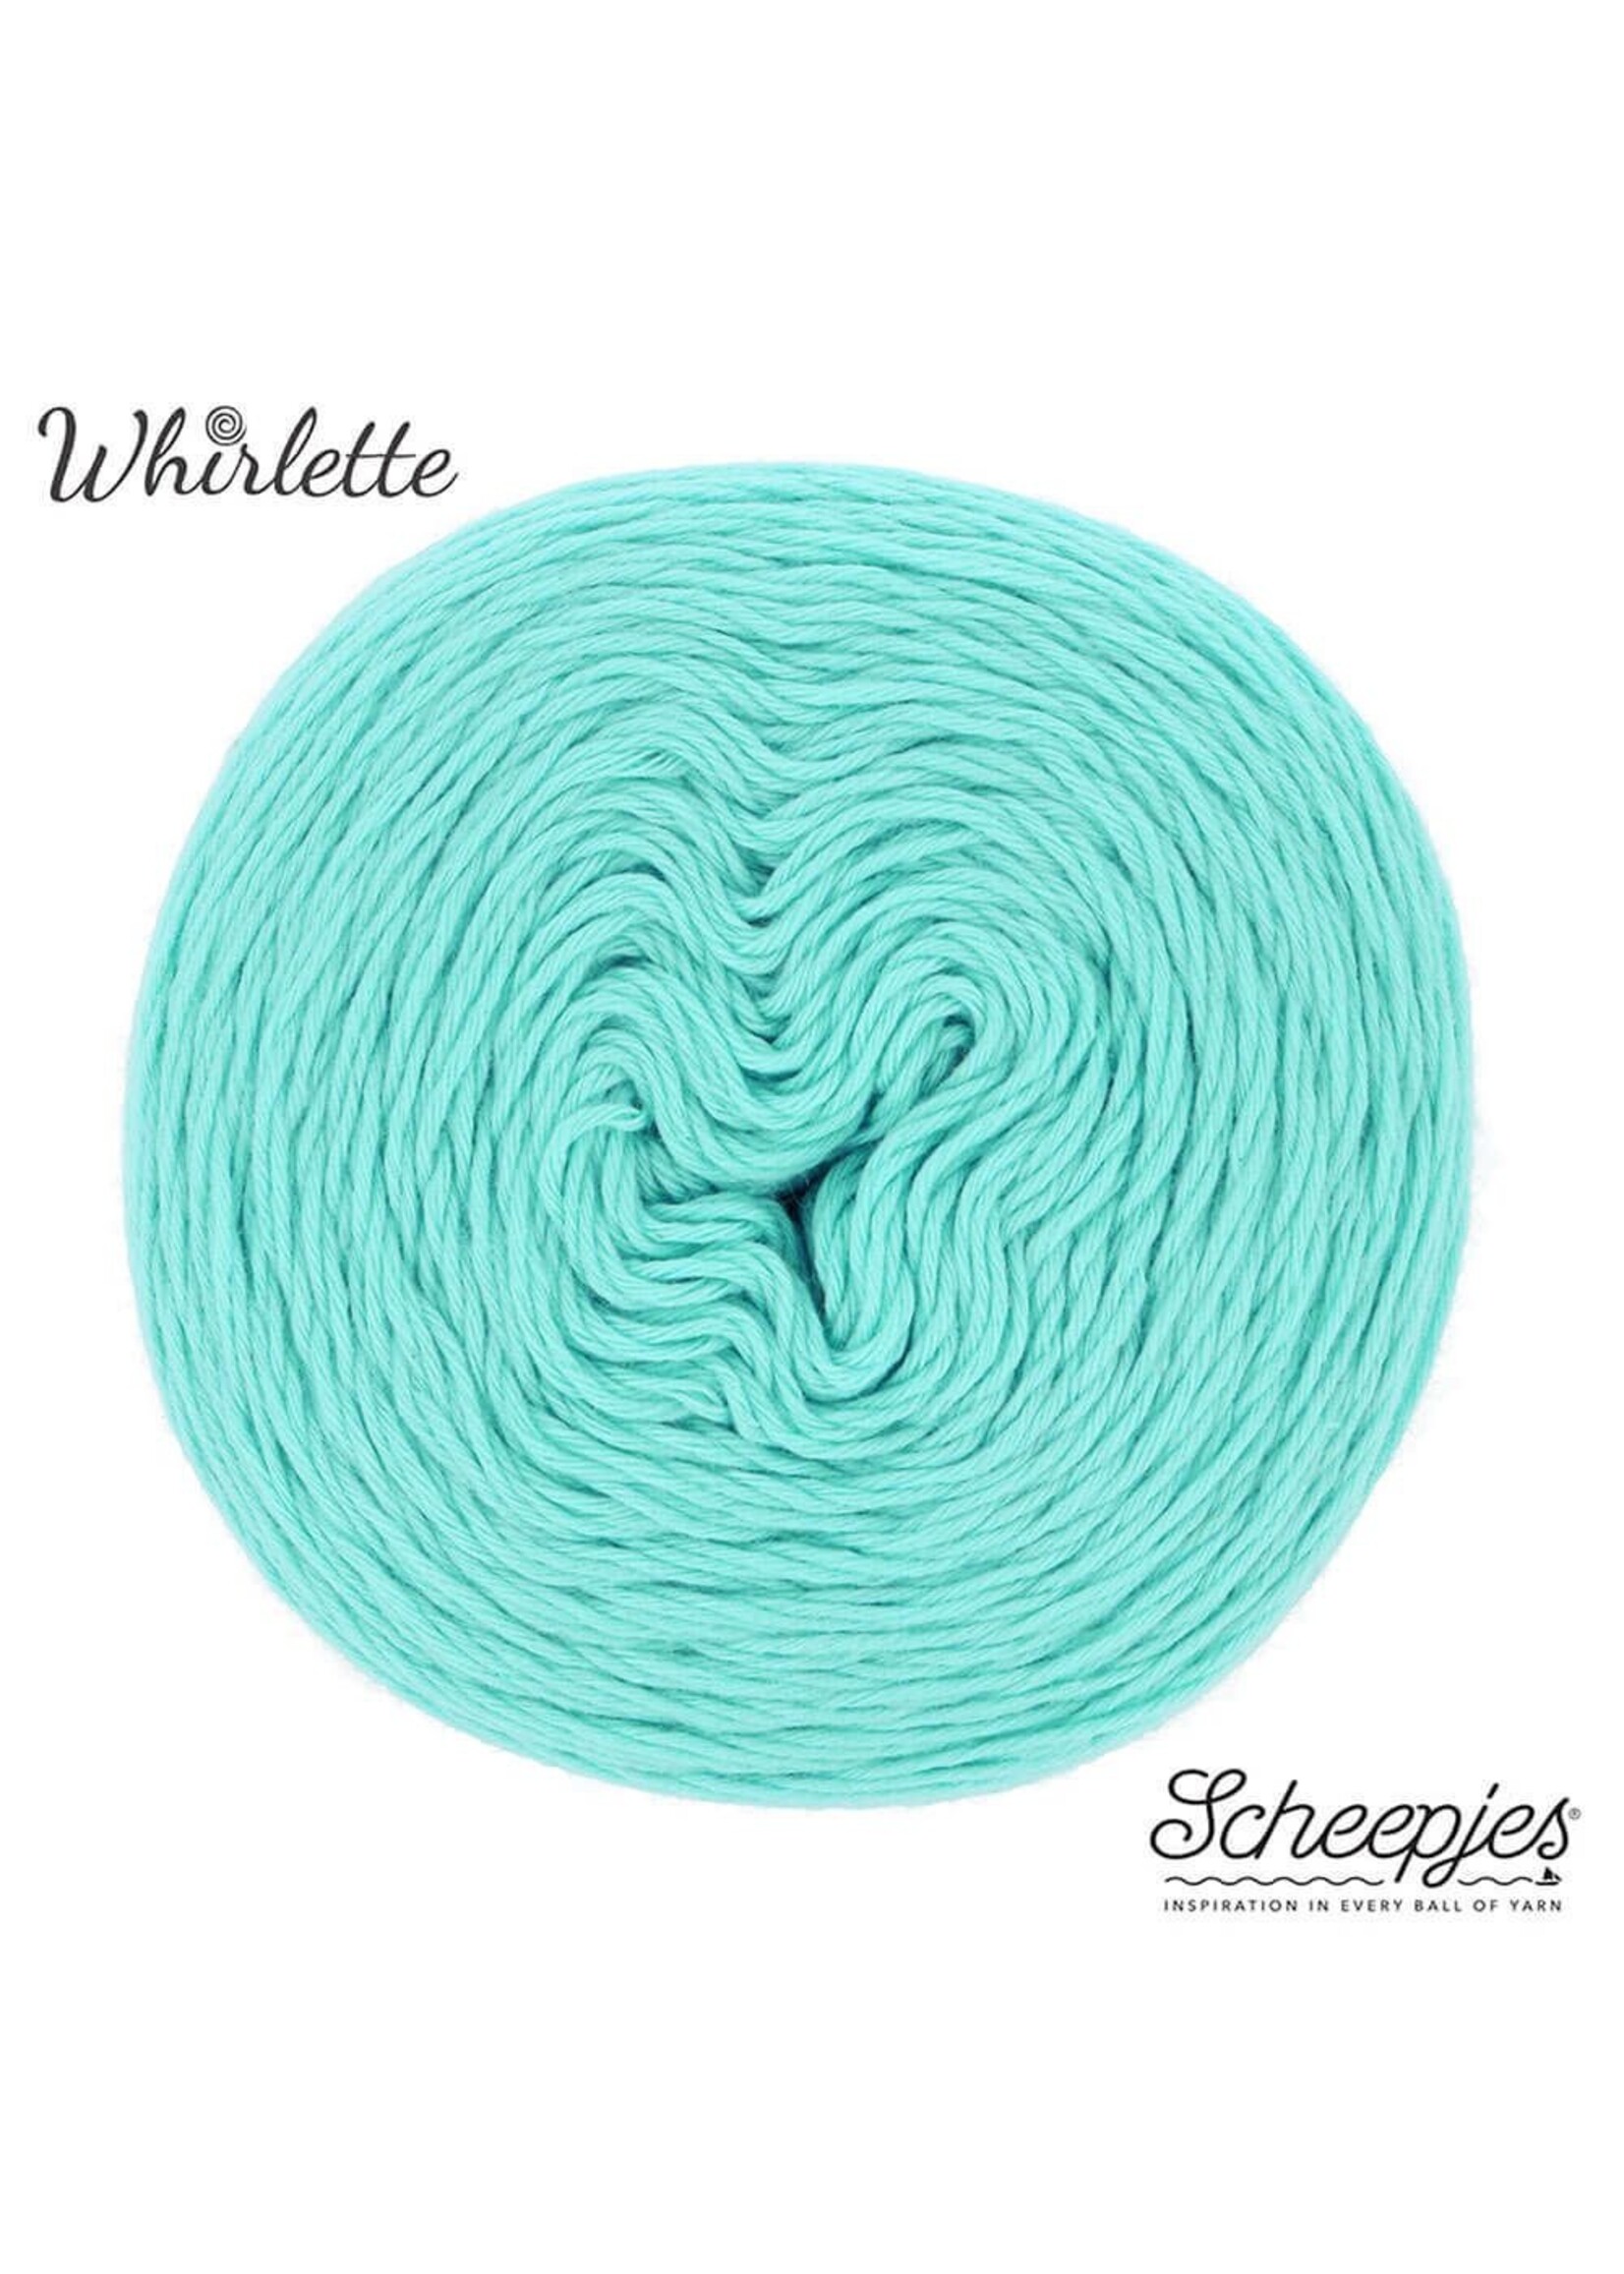 Scheepjes Whirlette - 866 Bubble